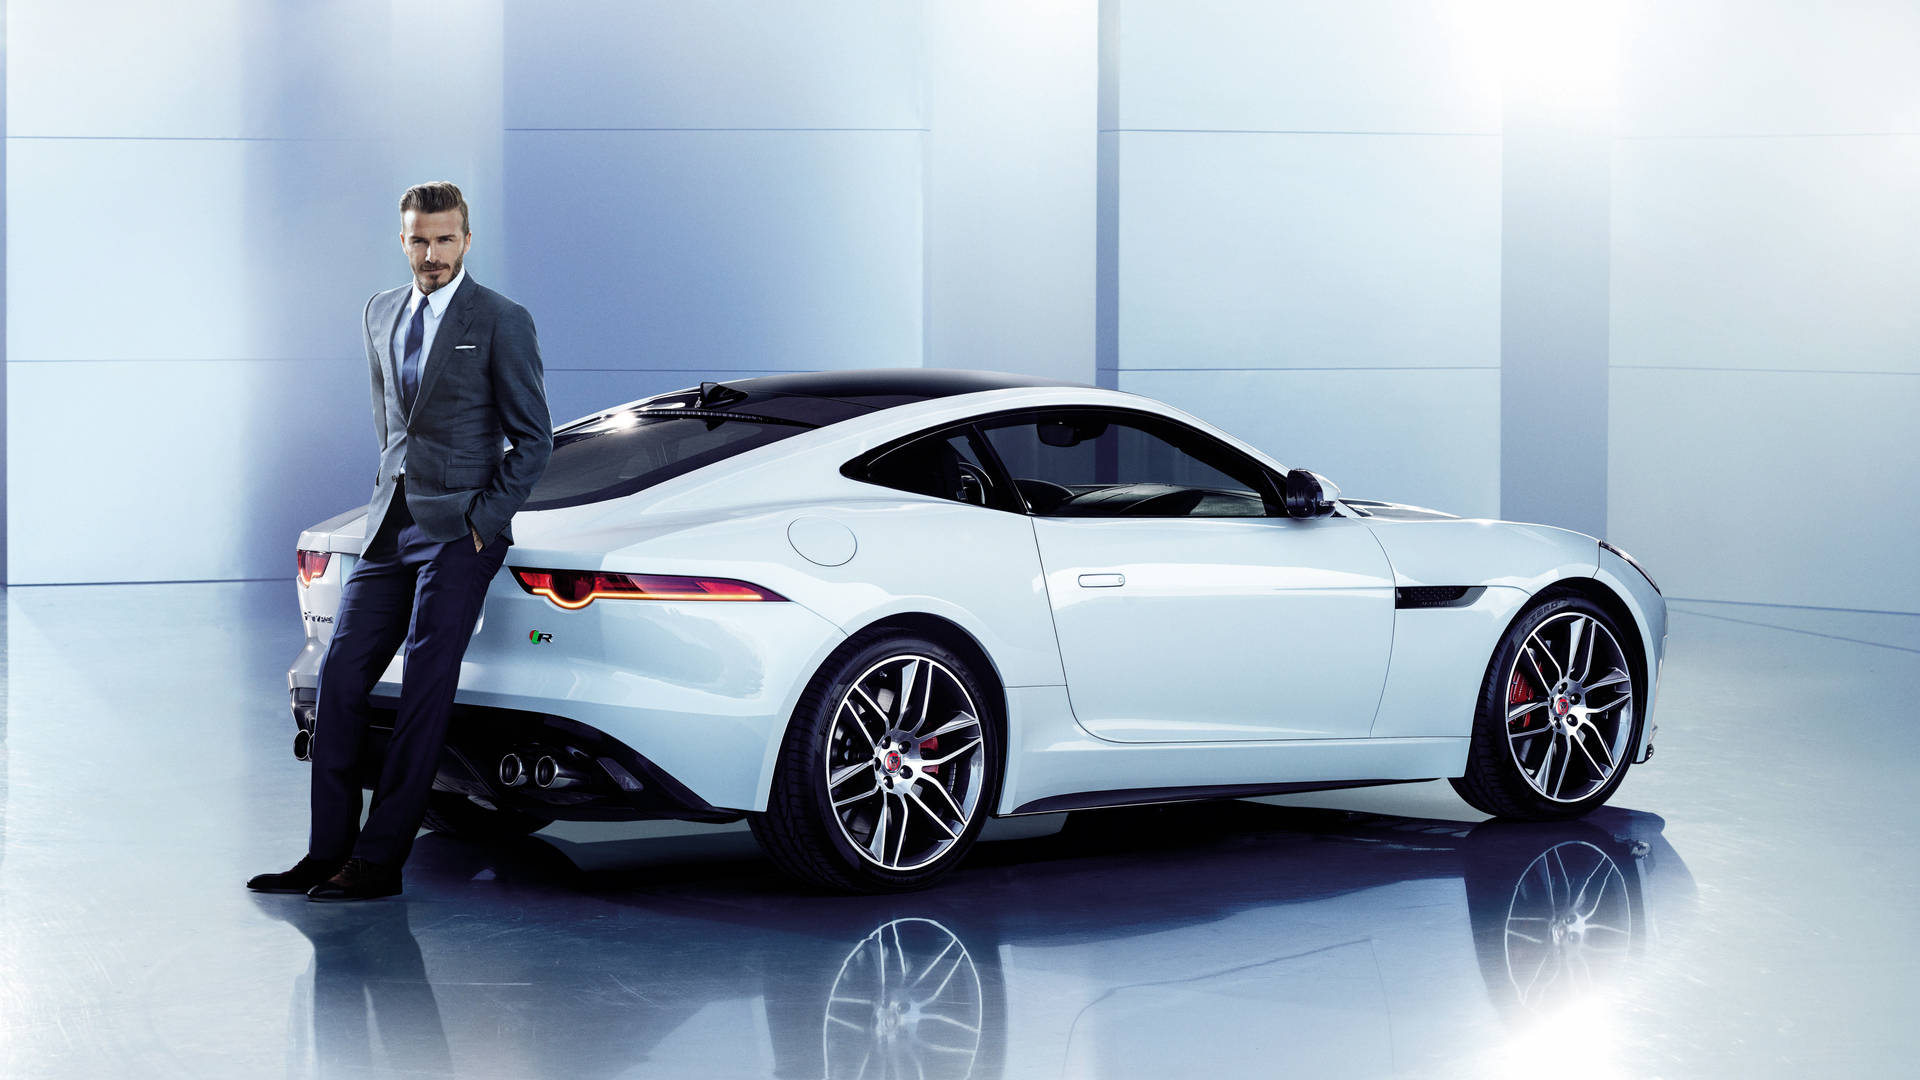 David Beckham Poses With A Sleek Jaguar Background